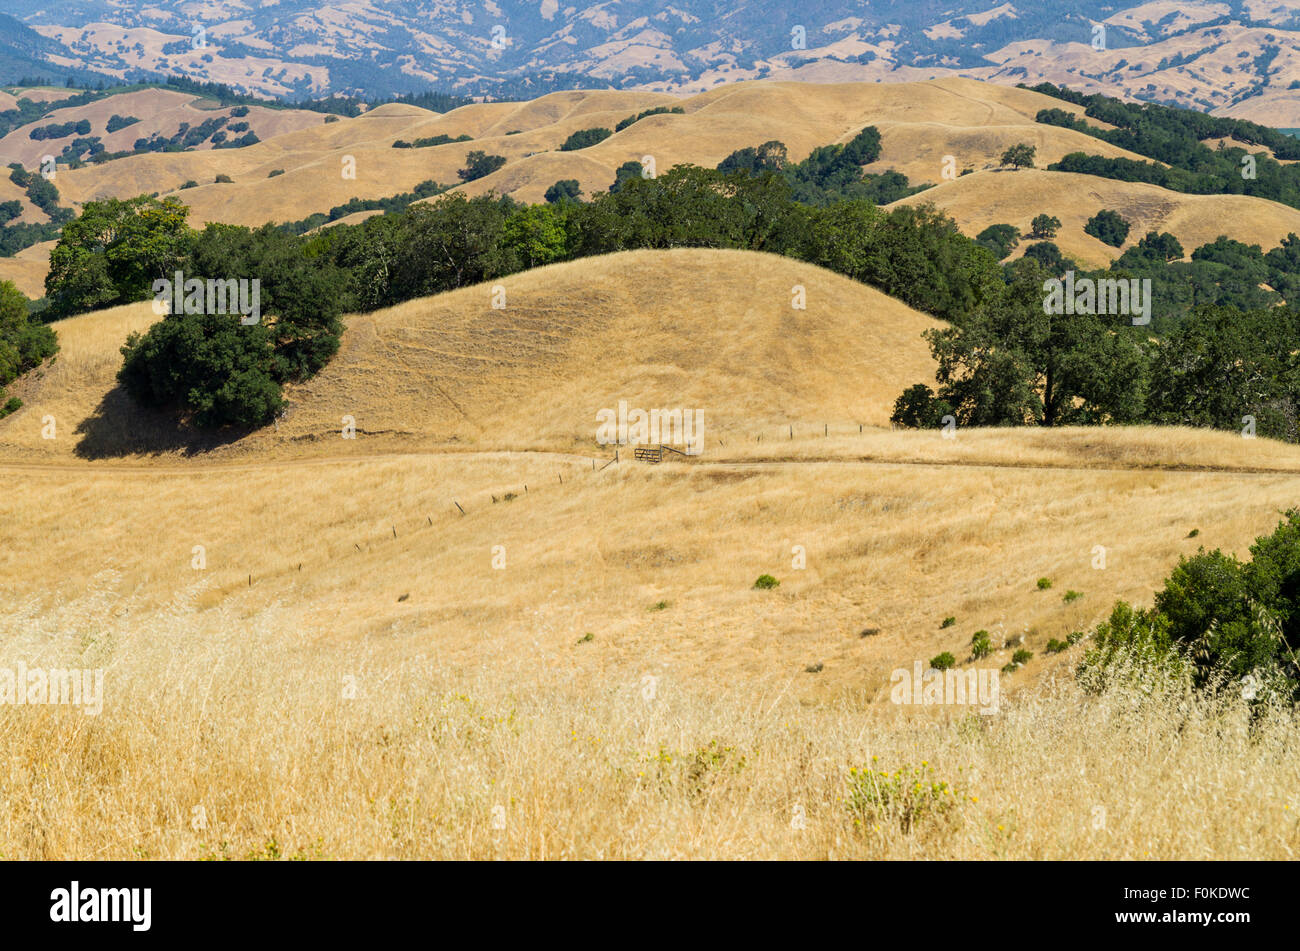 Pepperwood Presserve Santa Rosa and Healdsburg Sonoma County California Stock Photo